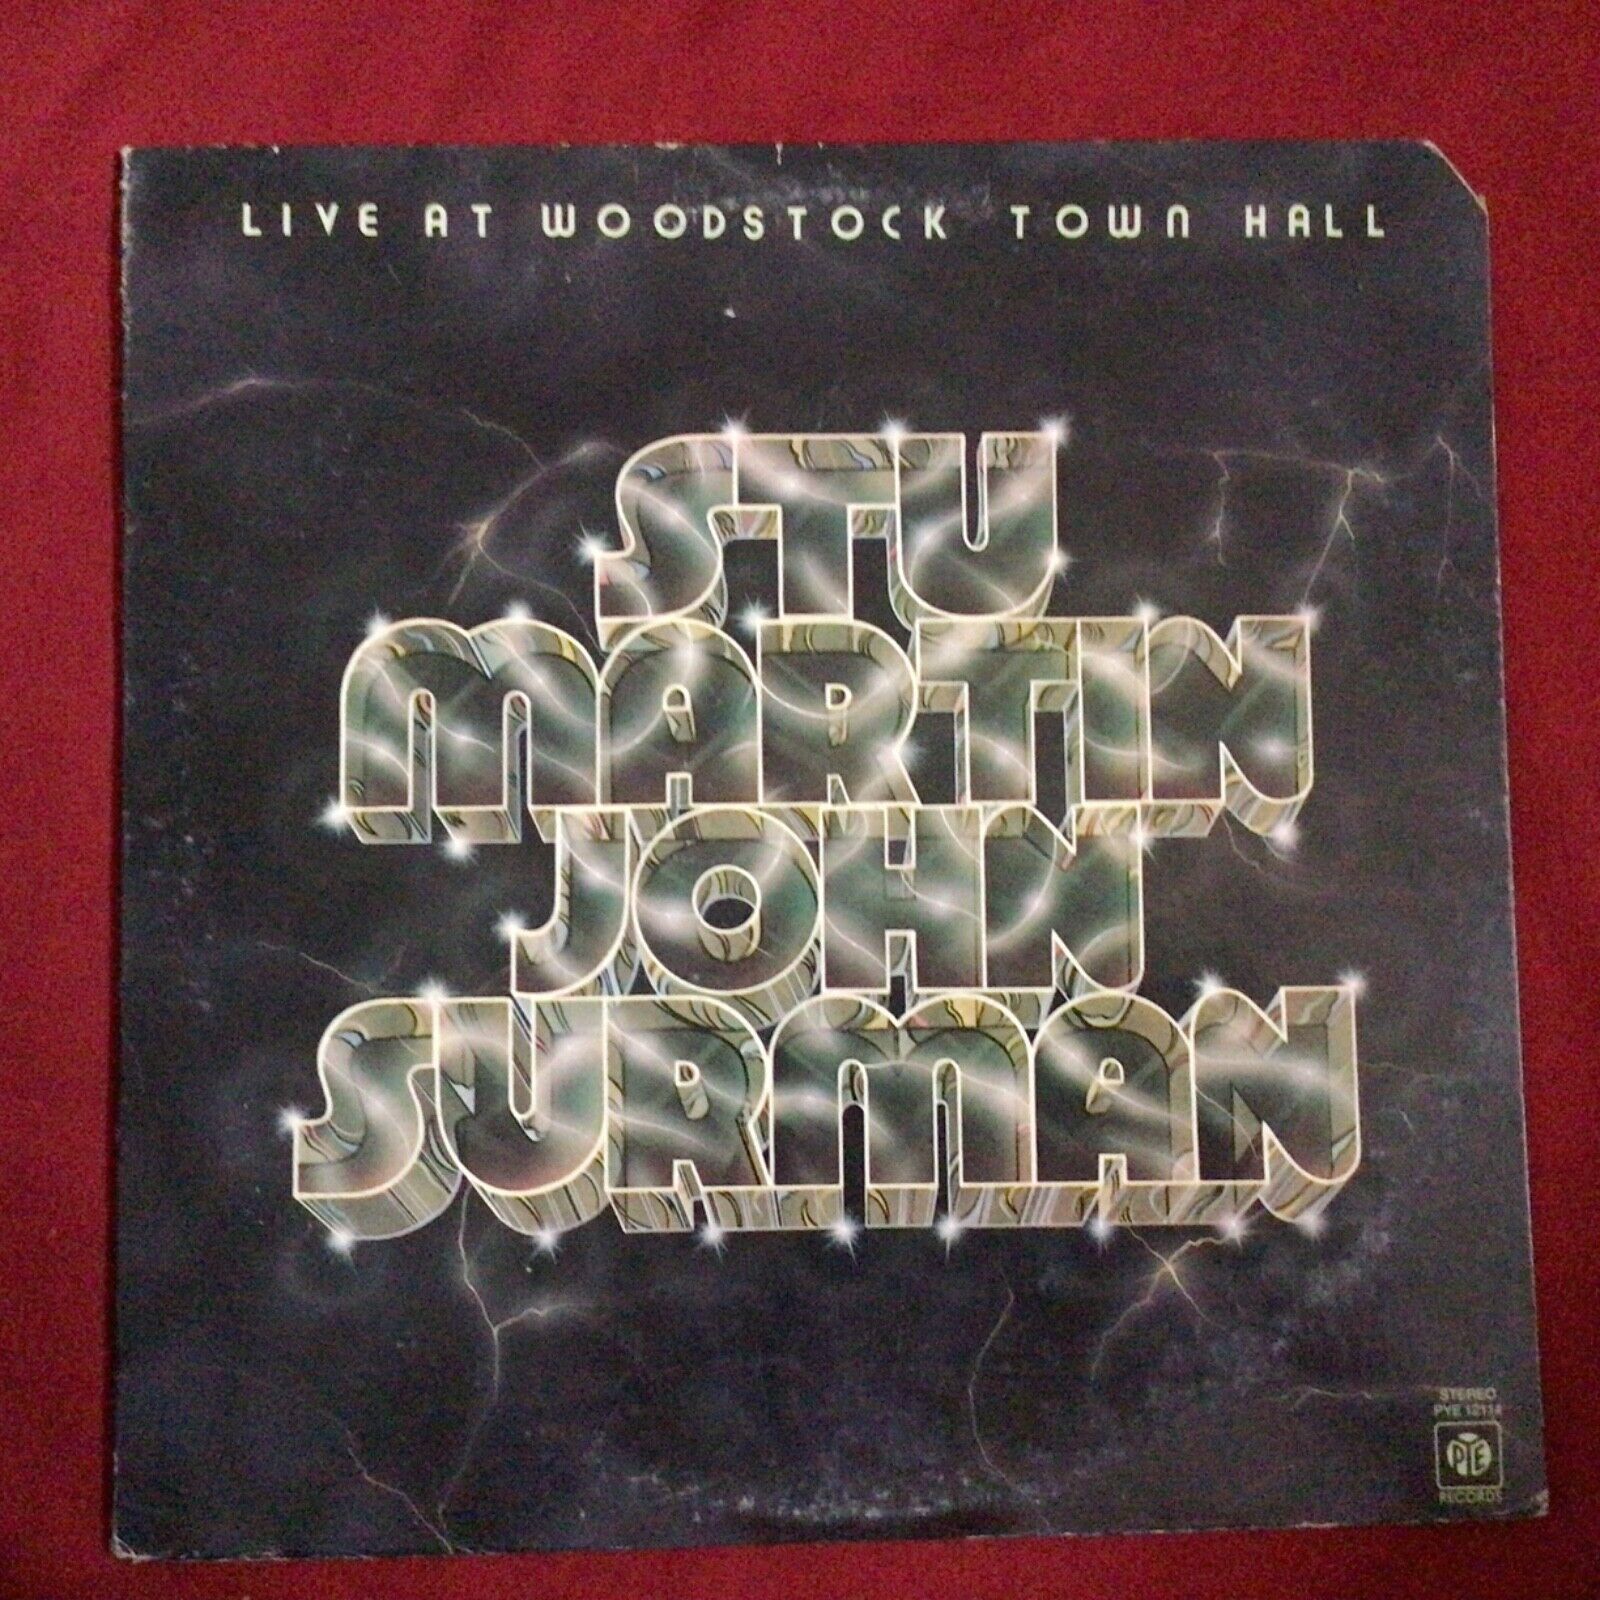 STU MARTIN & JOHN SURMAN 1975 PROMO LP "Live At Woodstock Town Hall" JAZZ VG/VG+